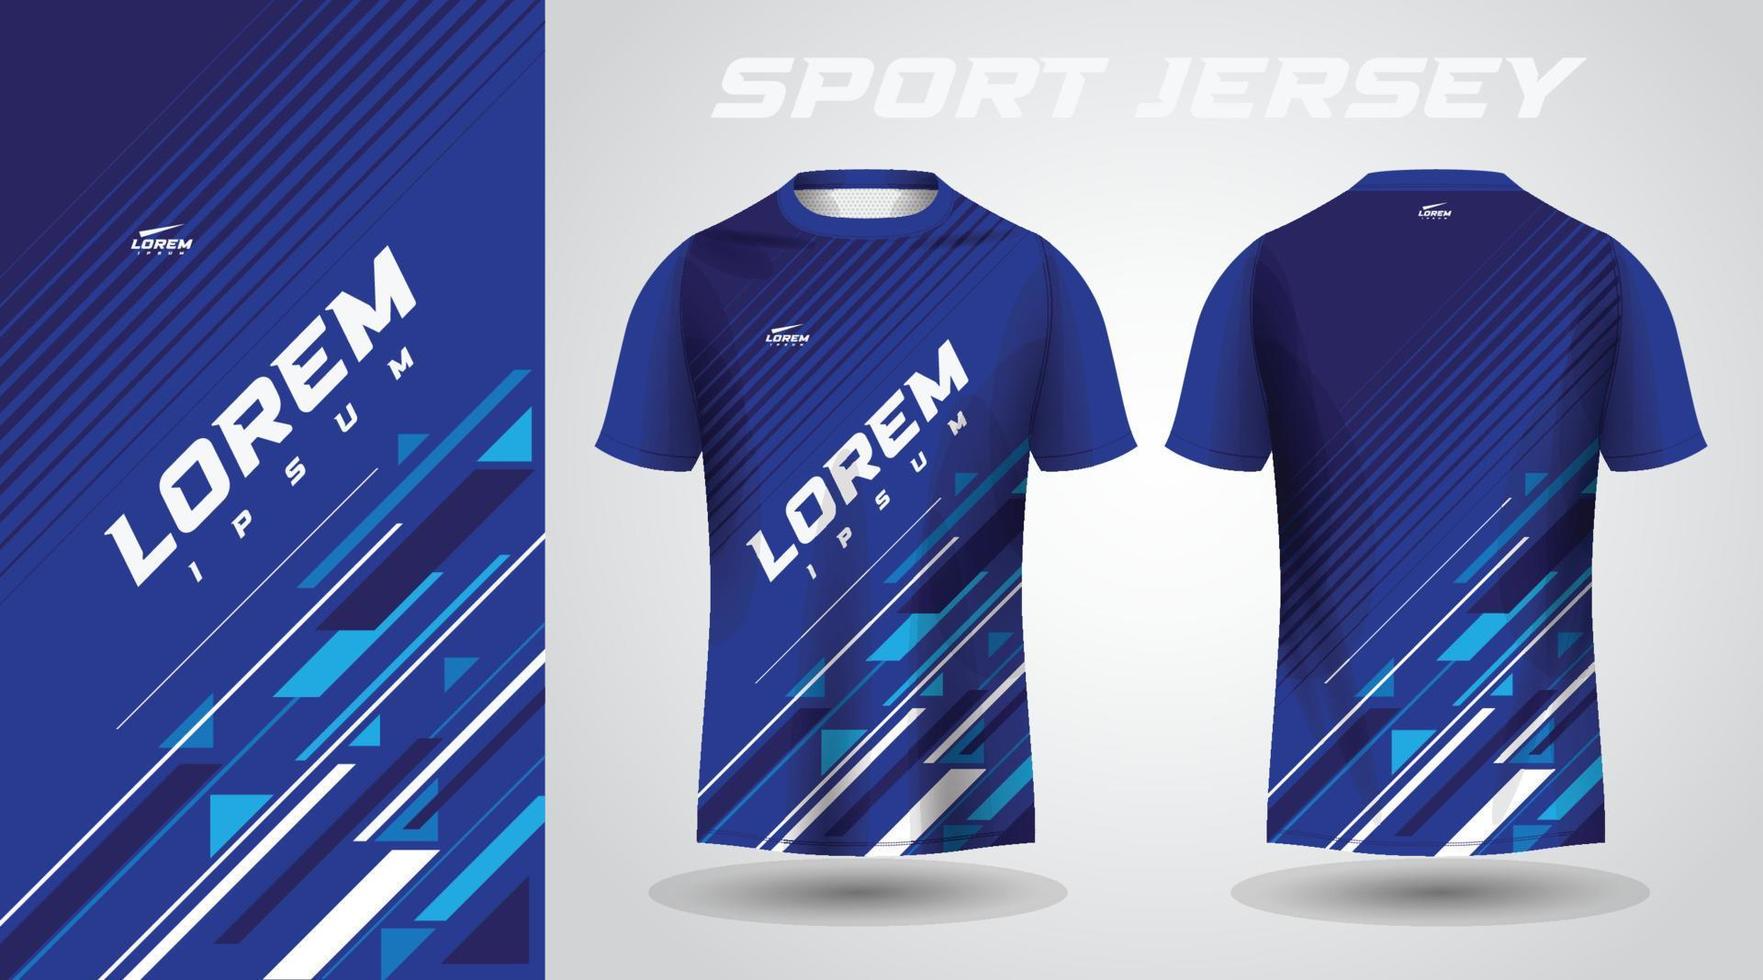 blå t-shirt sporttröja design vektor